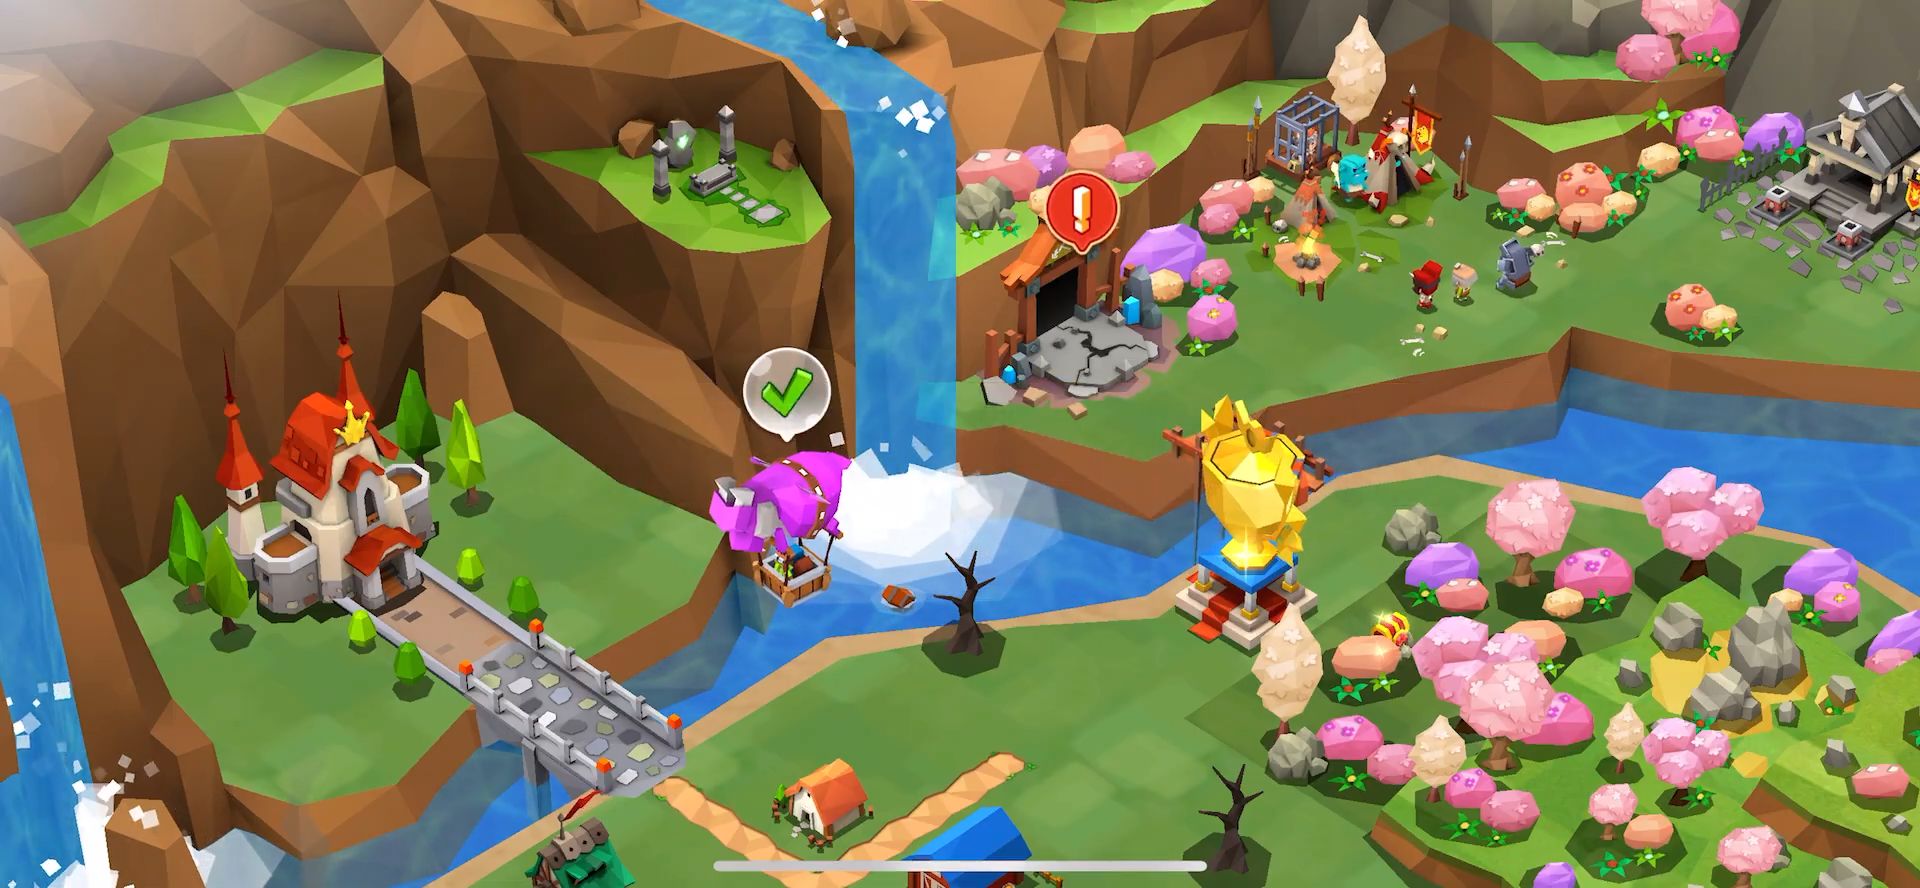 Garena Fantasy Town - Farm Sim